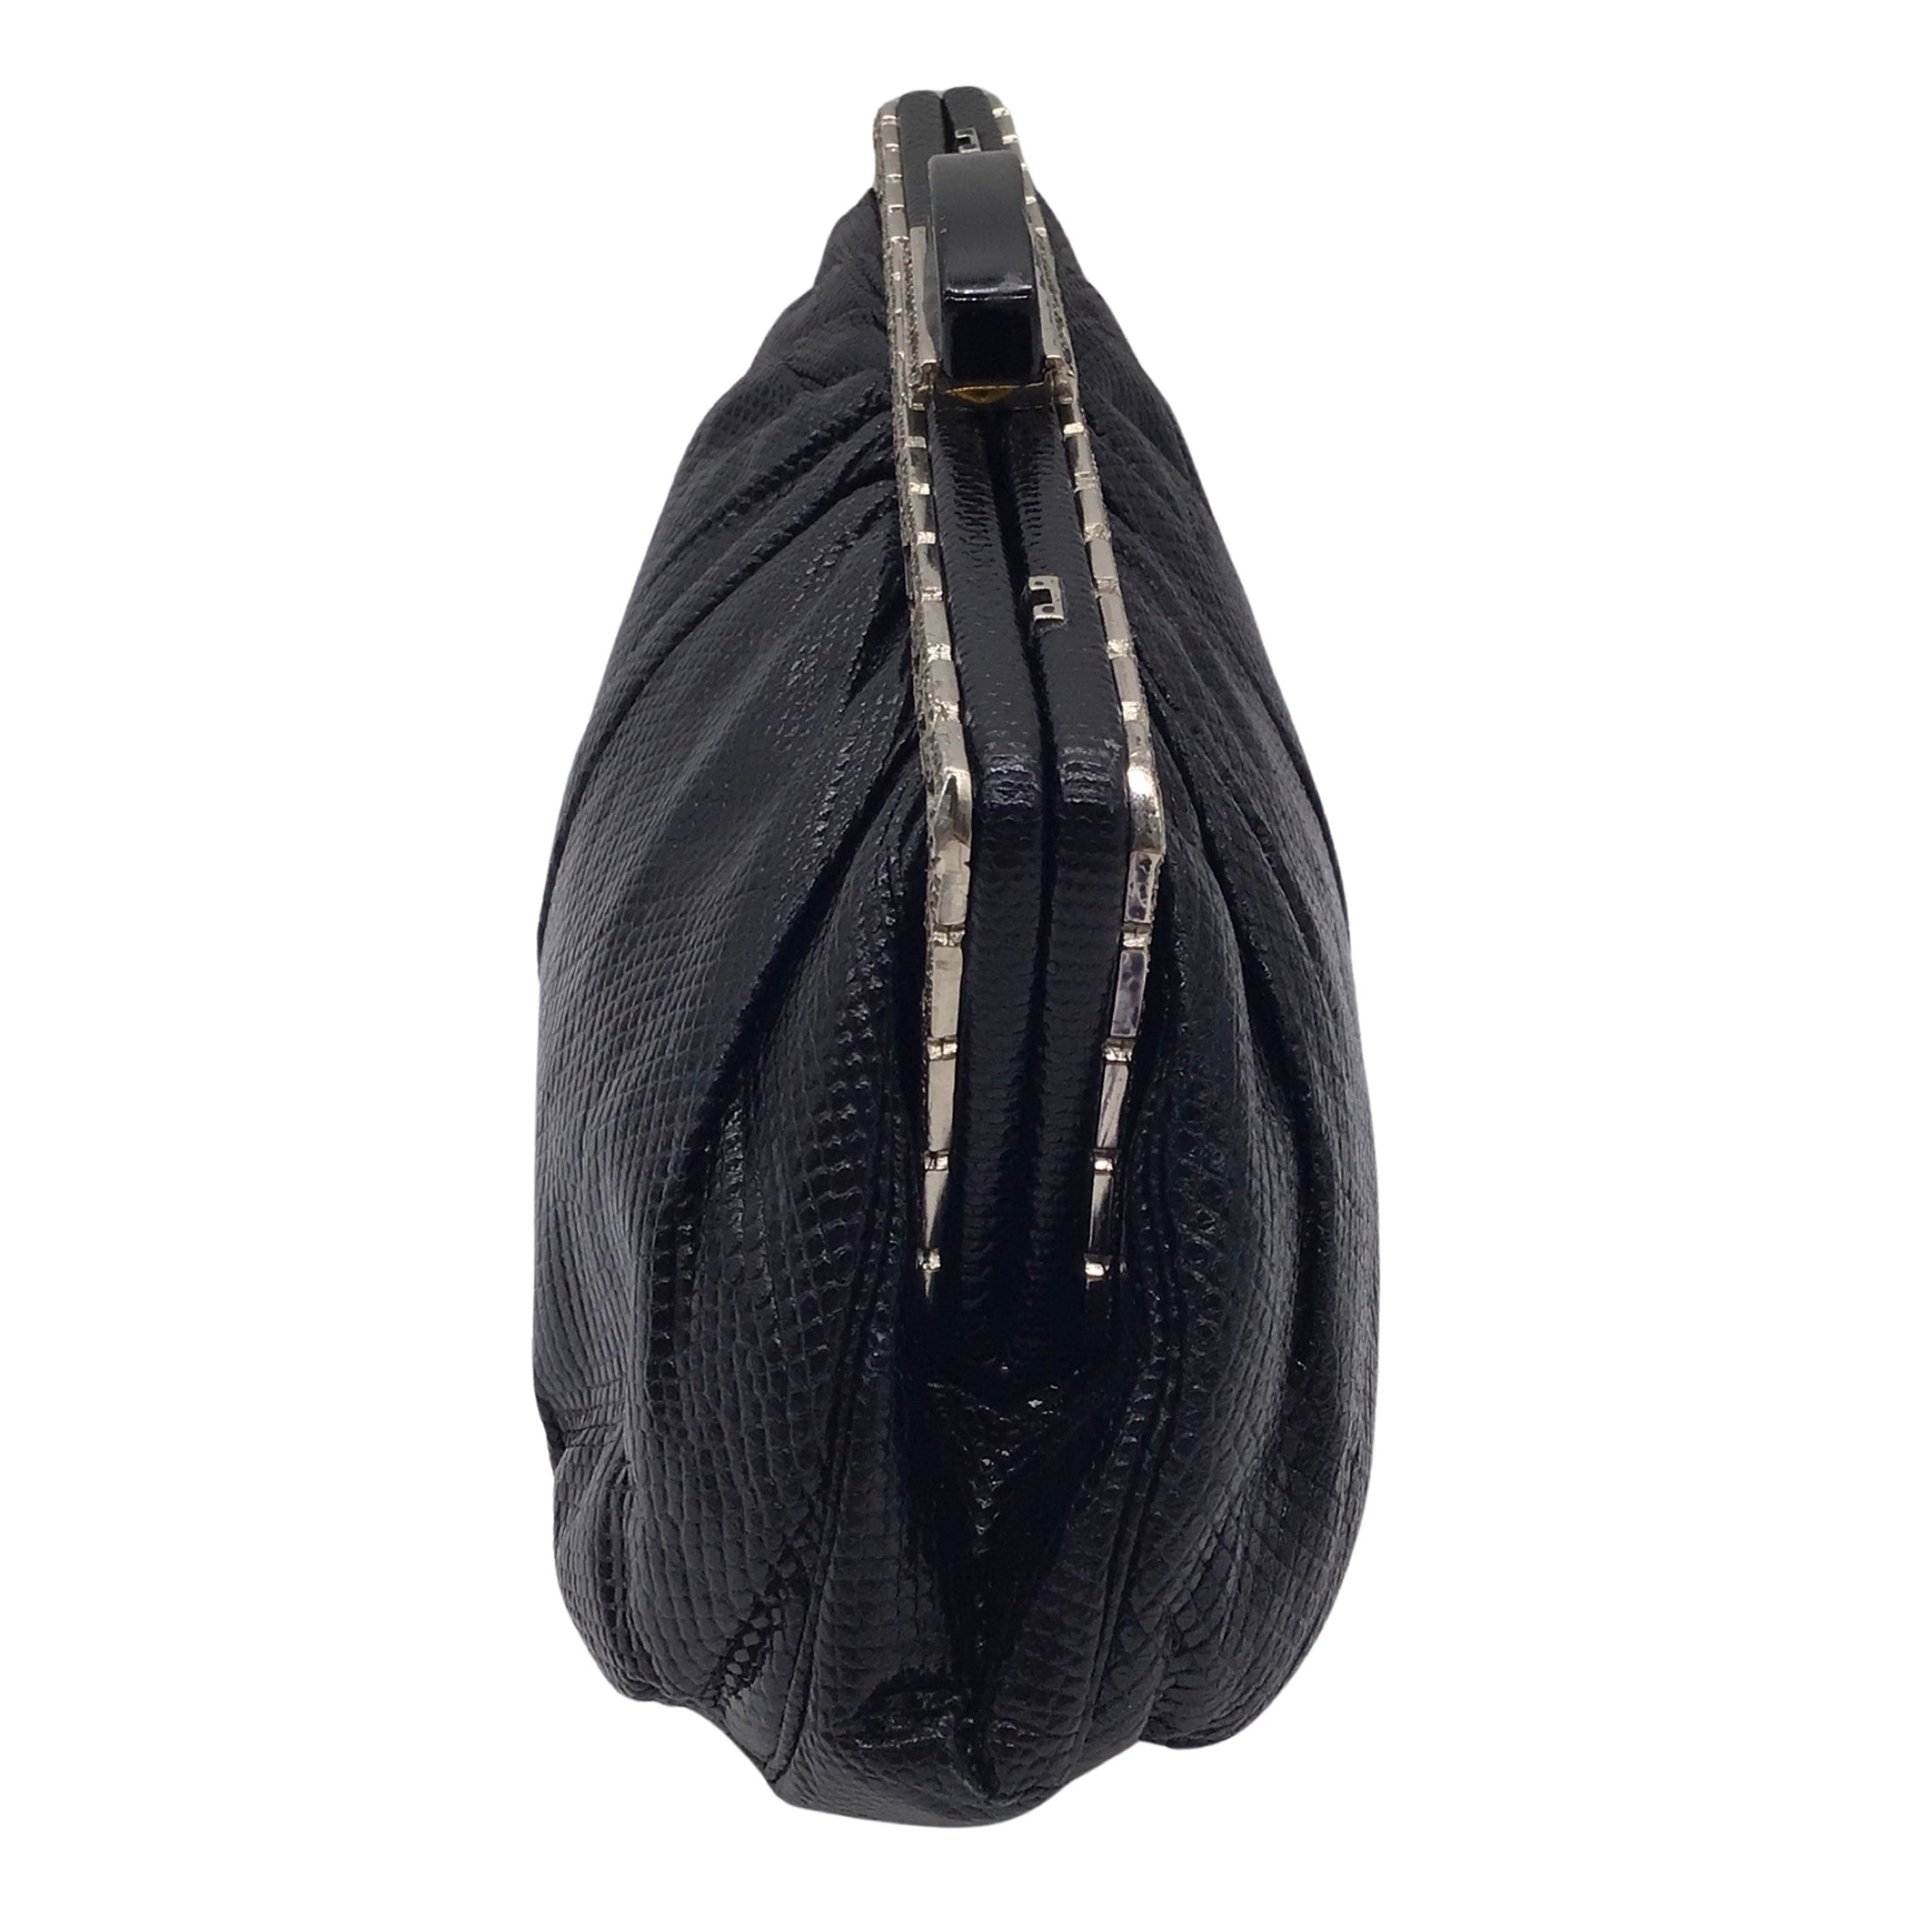 Judith Leiber Black Lizard Skin Leather Clutch Bag